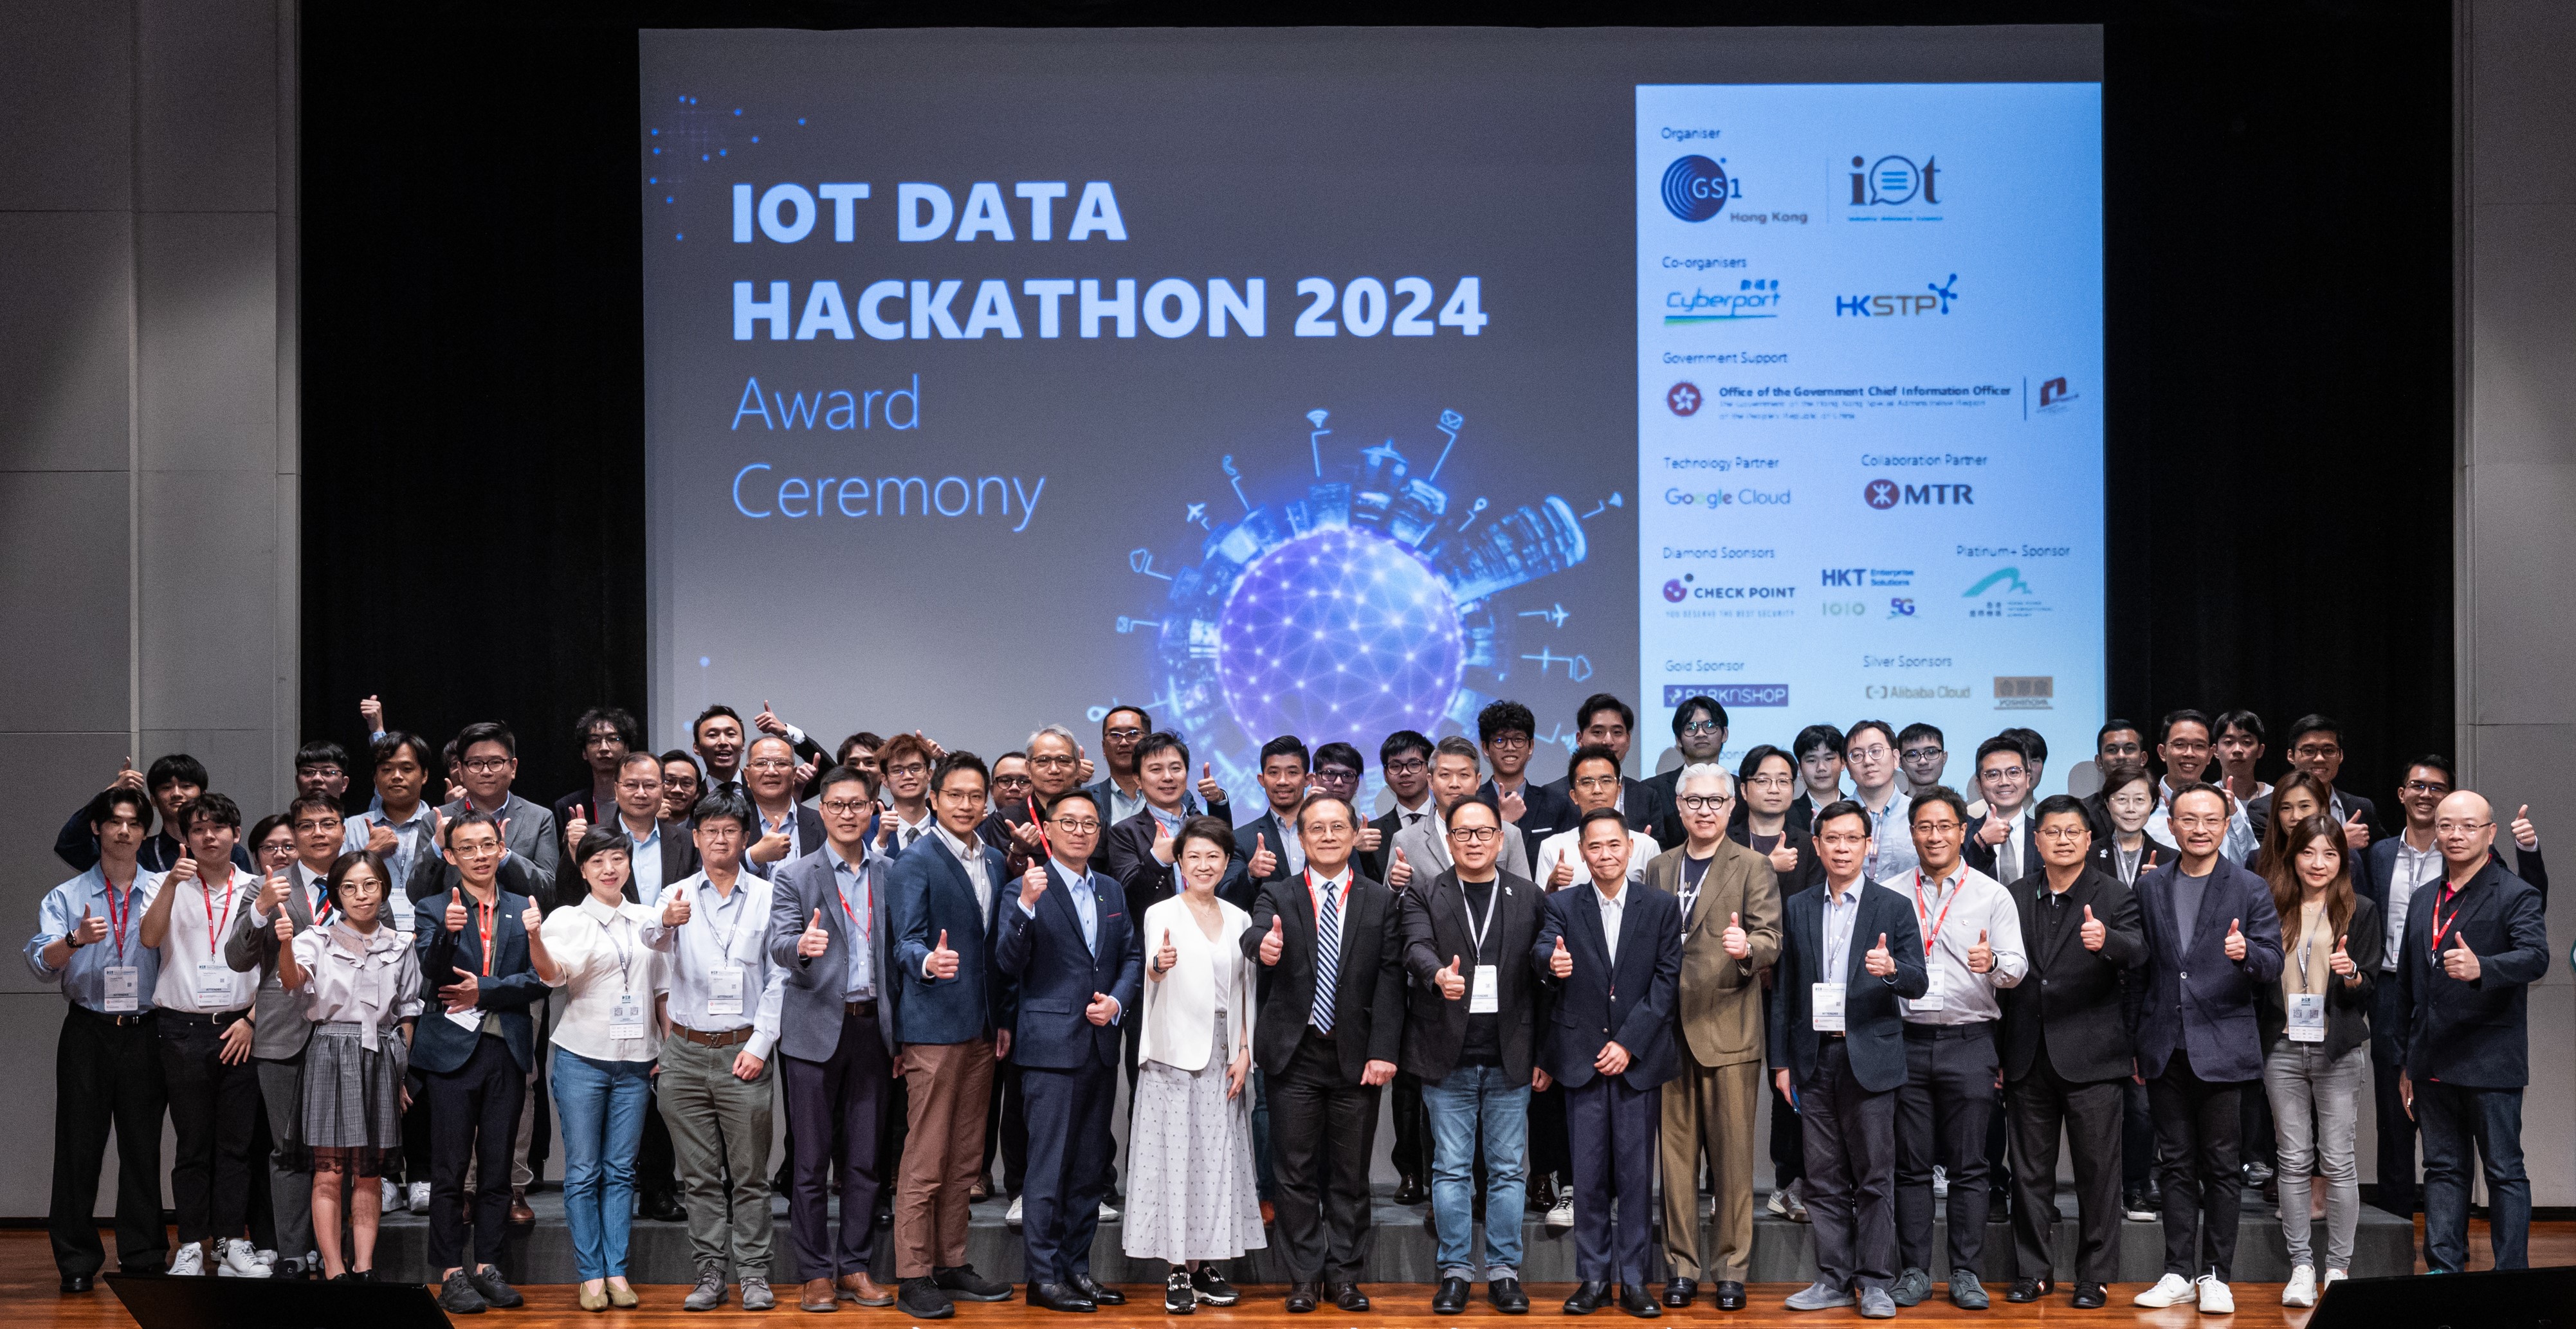 GS1 HK IOT Data Hackathon 2024 Award Presentation Ceremony